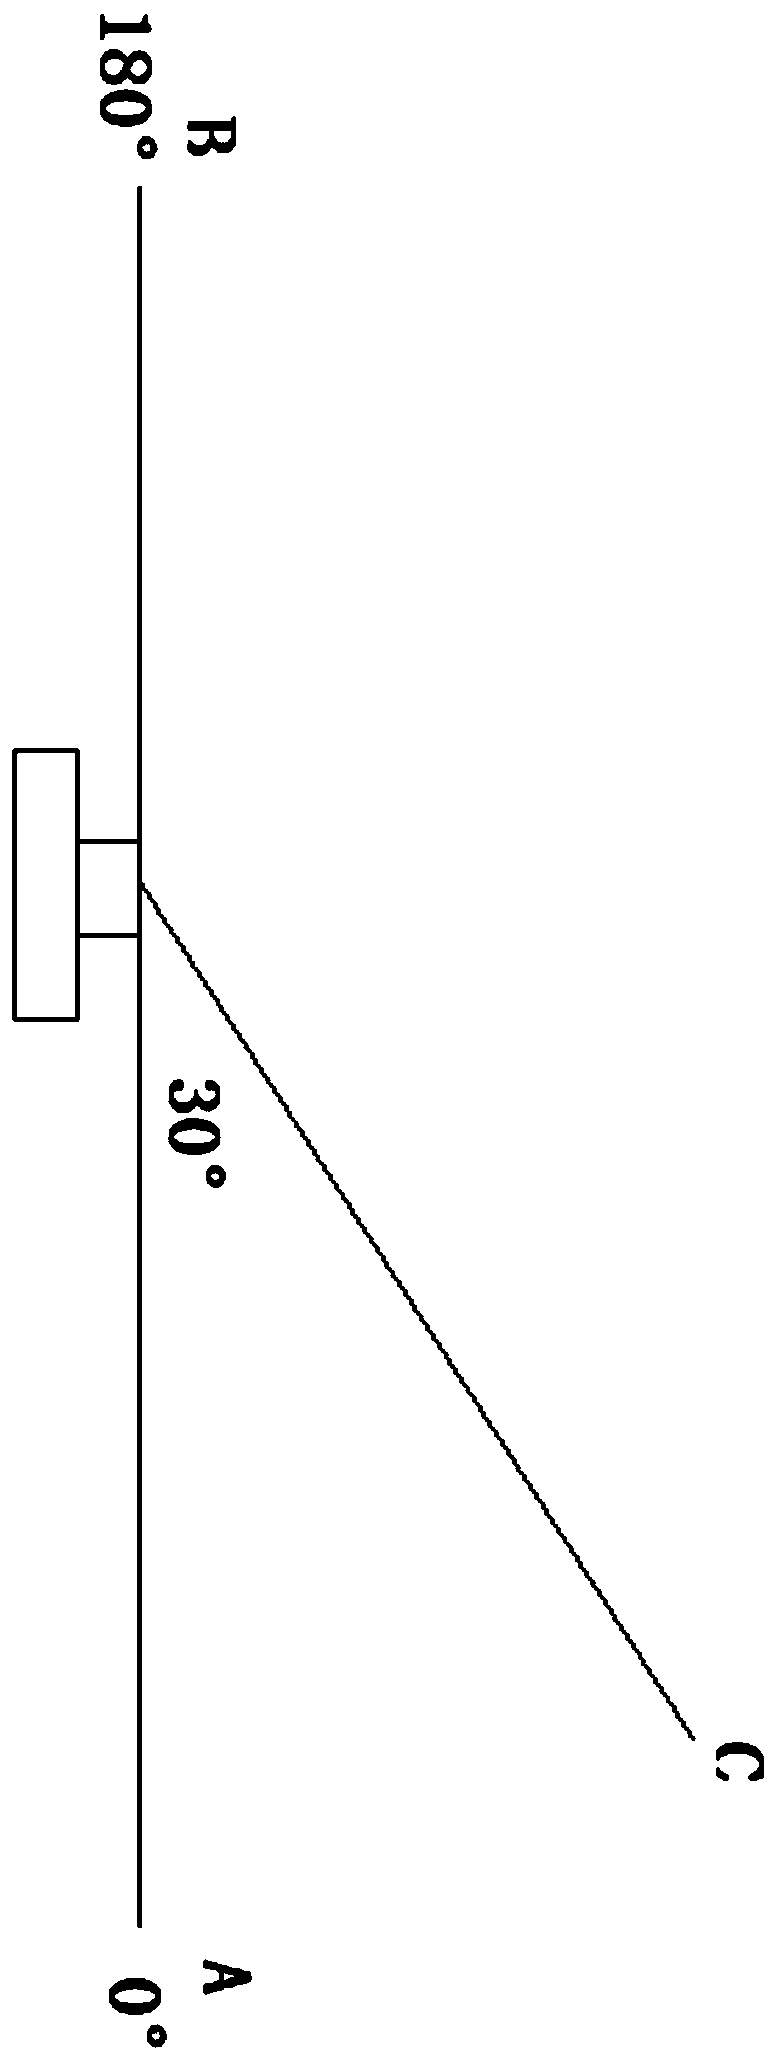 Sound source positioning method adopting fisheye lens, and equipment for method